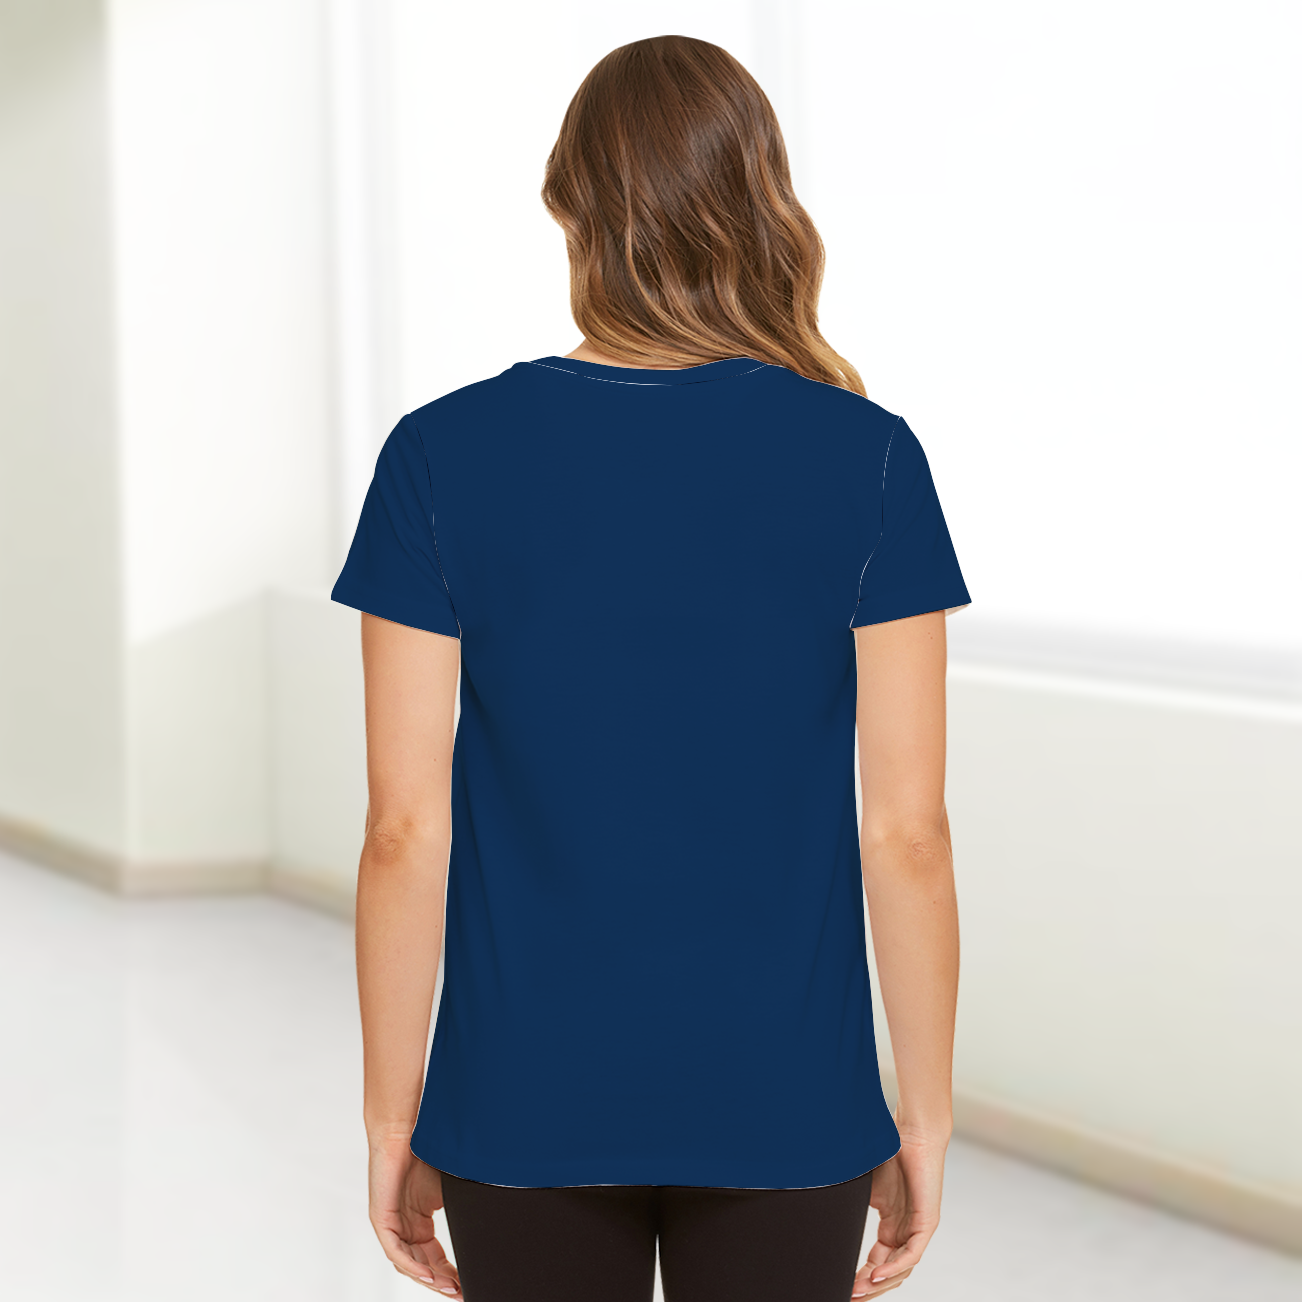 Custom Shirts Unisex All Over Print T-Shirt